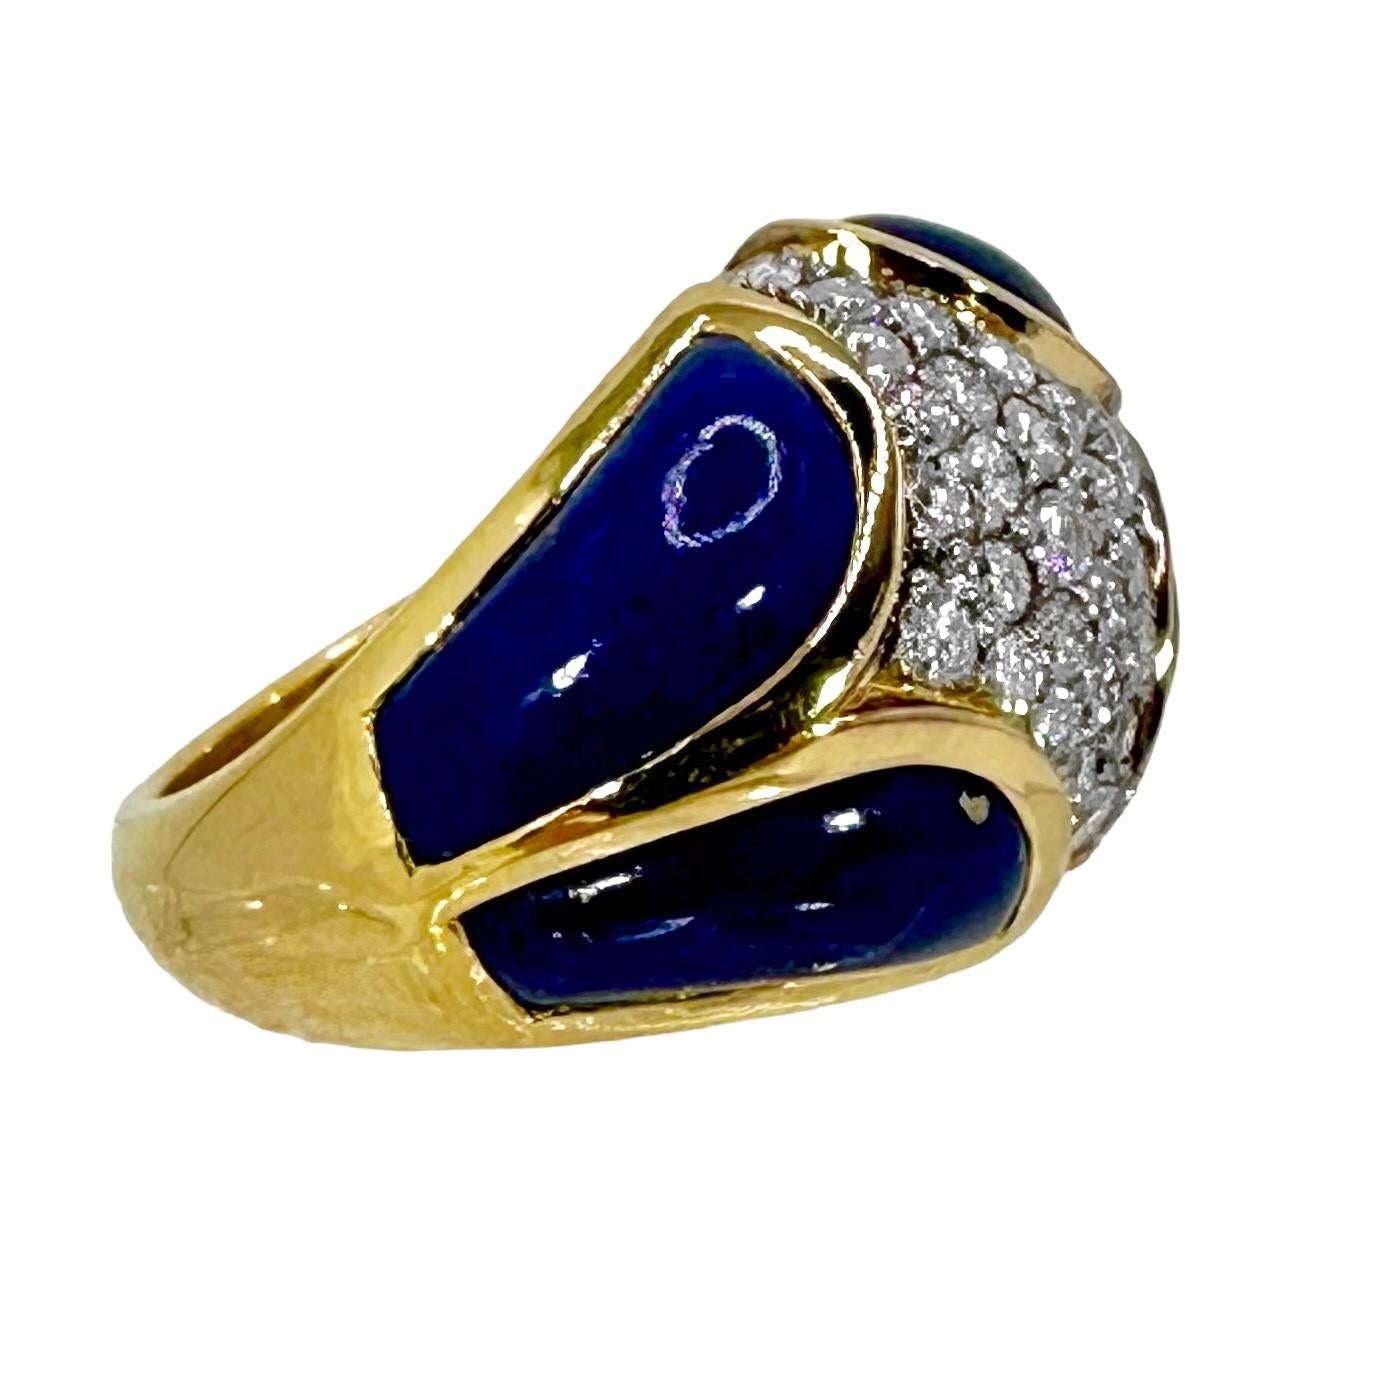 Modern Late-20th Century 18k Yellow Gold, Lapis-Lazuli and Diamond Fashion Ring For Sale